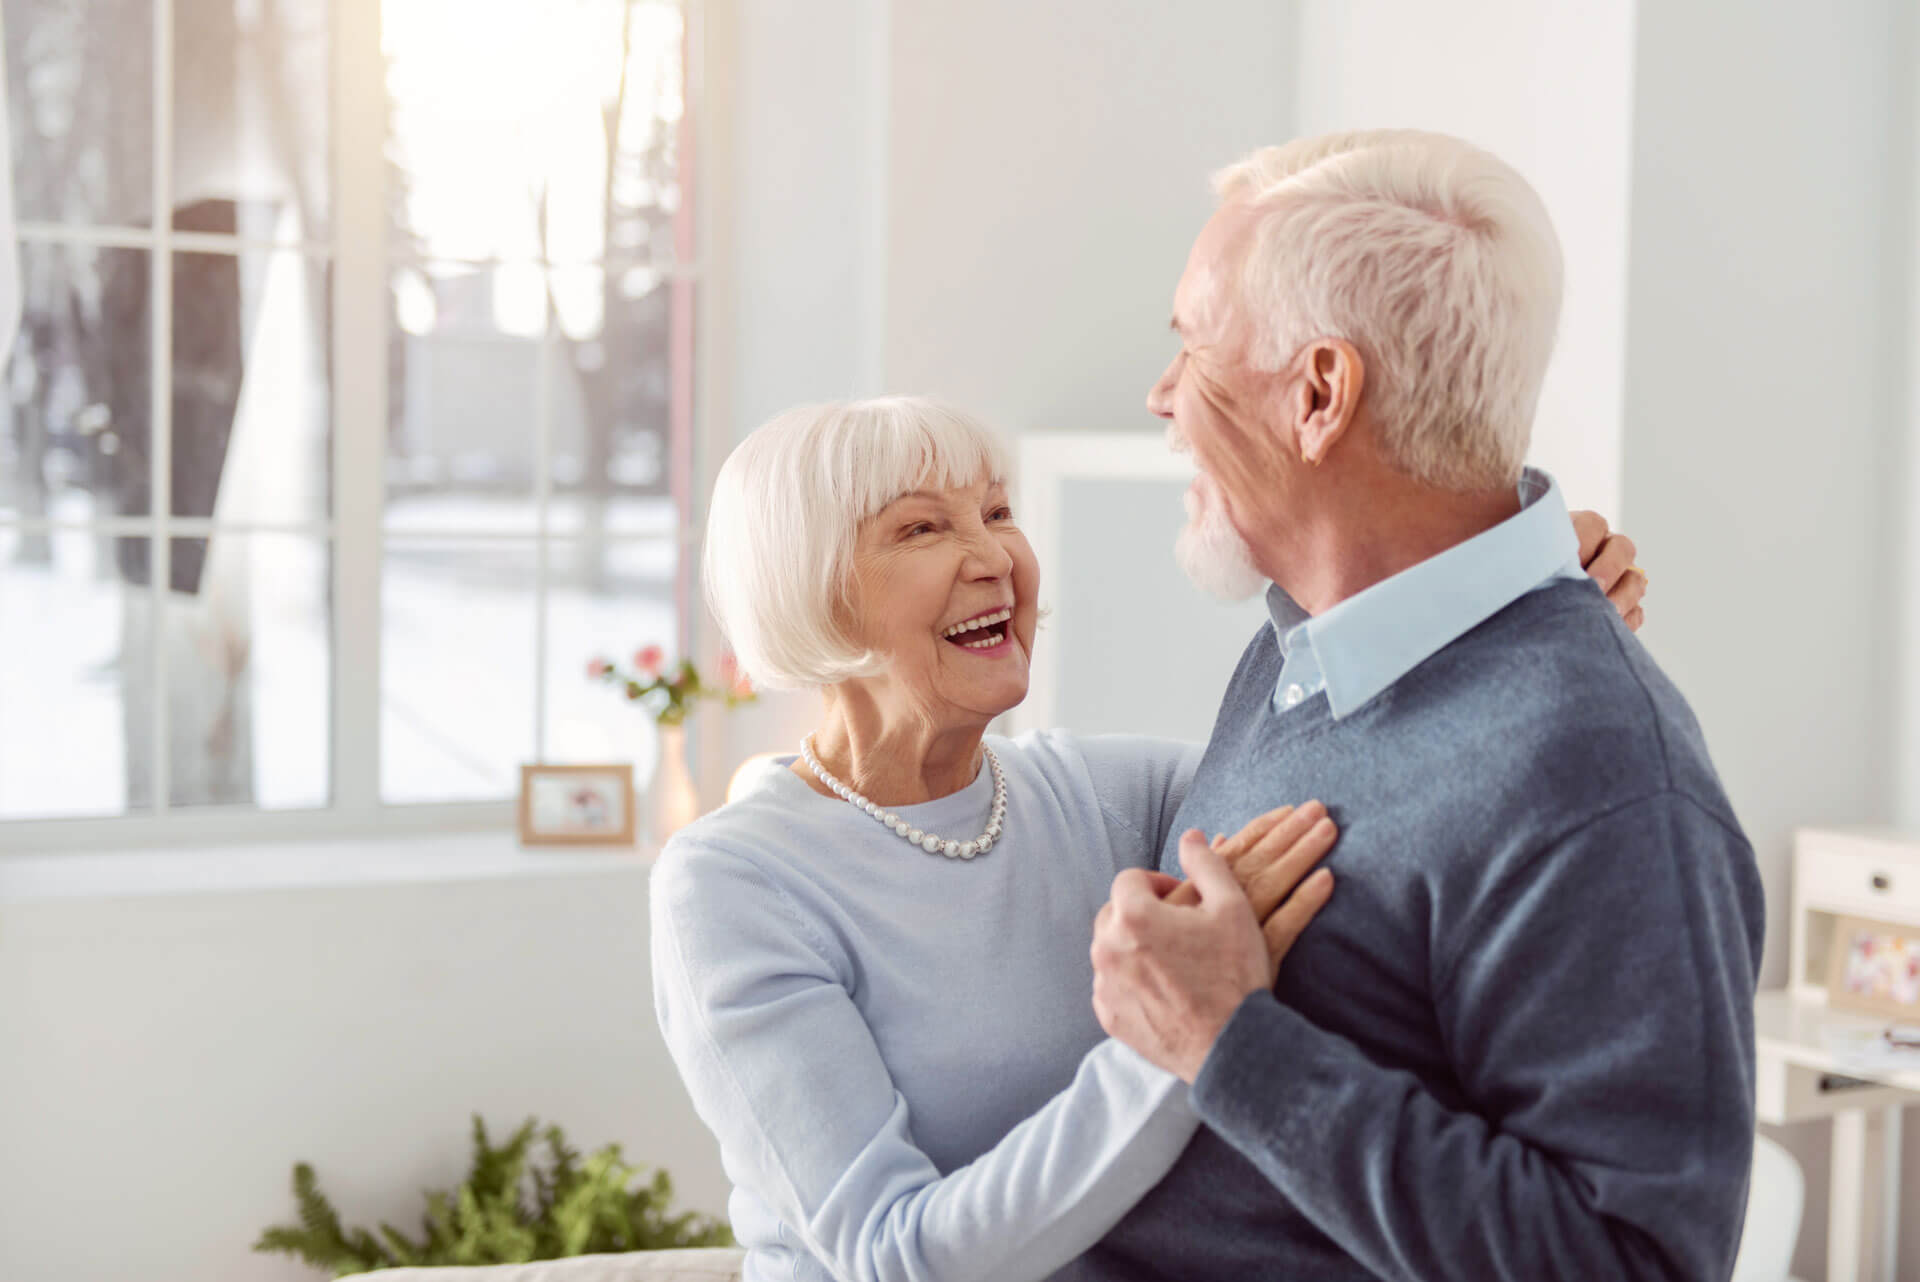 Senior couple embracing & smiling together inside their home